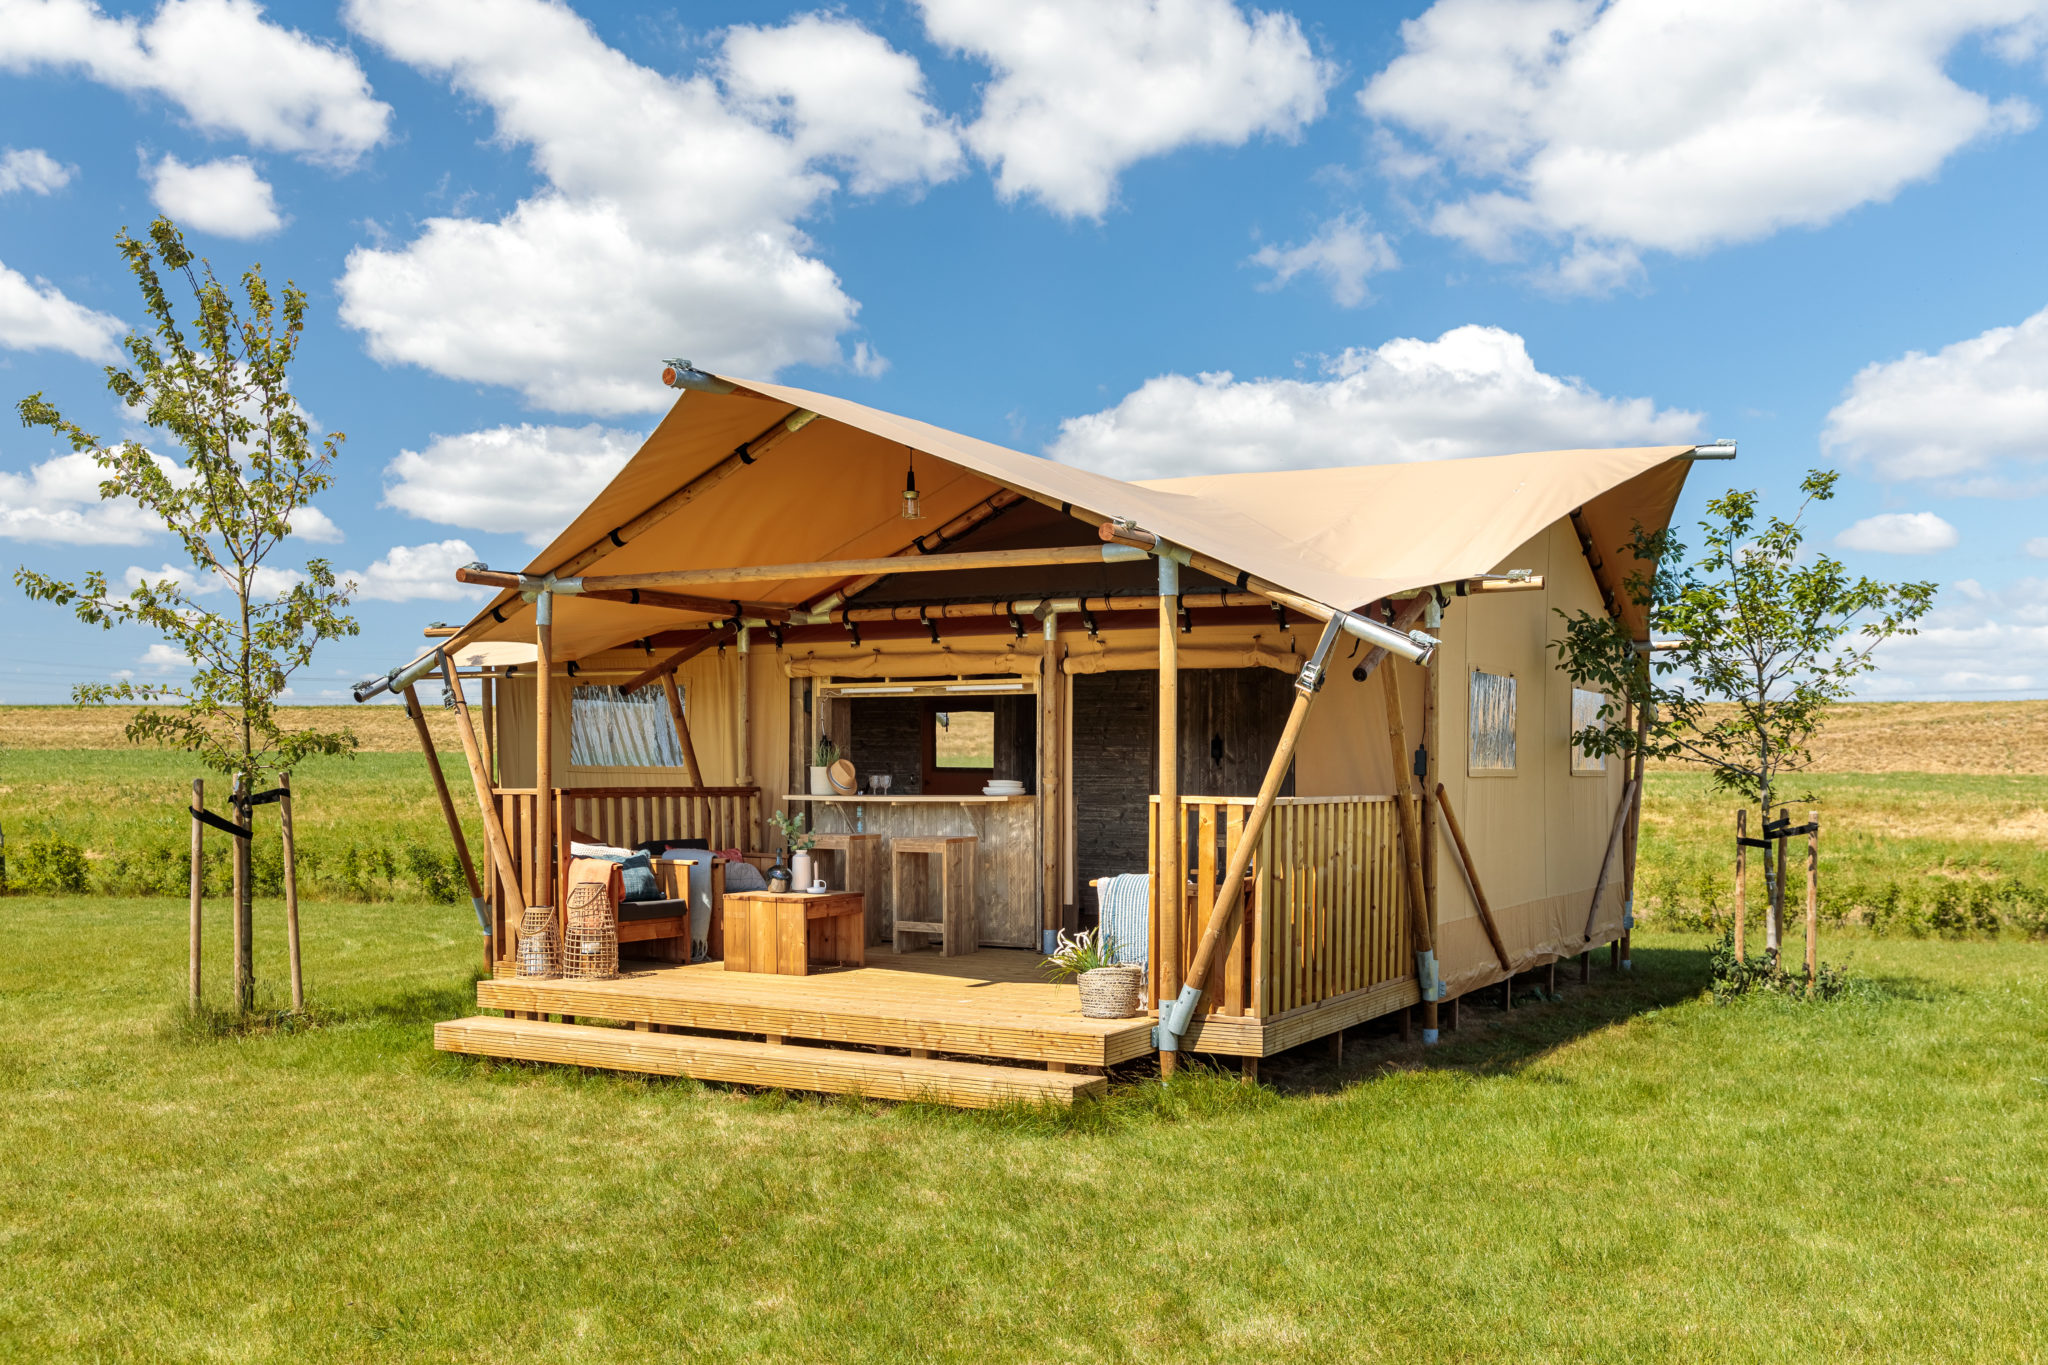 luxury safari tents for sale uk